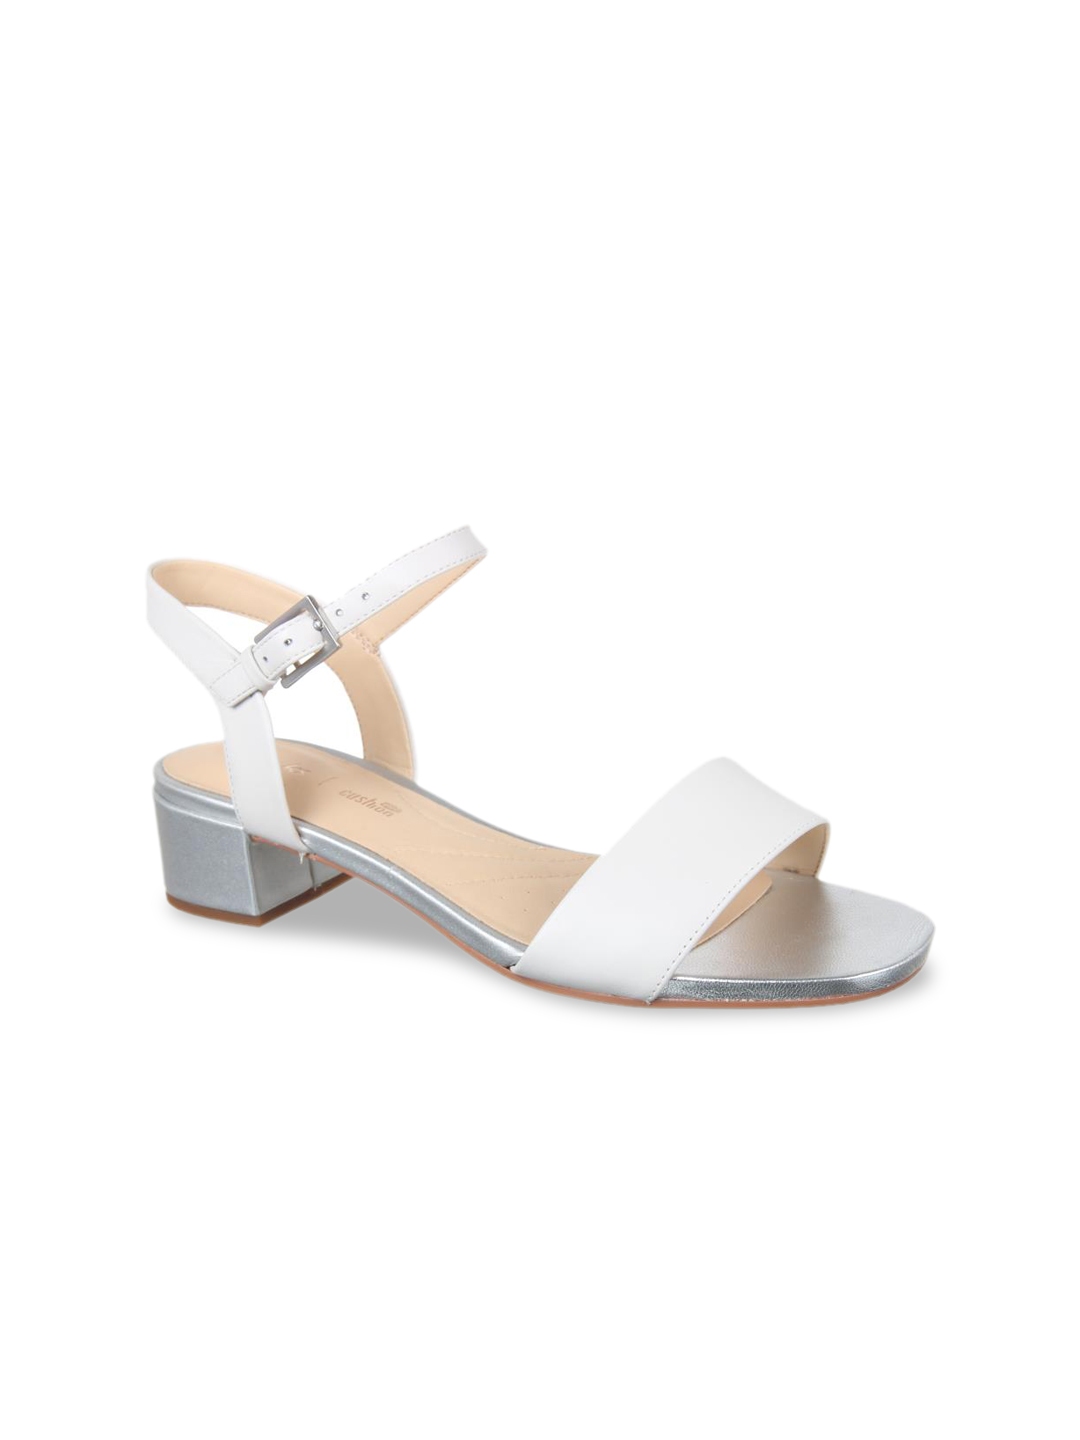 Buy Clarks Women White Solid Heels - Heels for Women 9492817 | Myntra